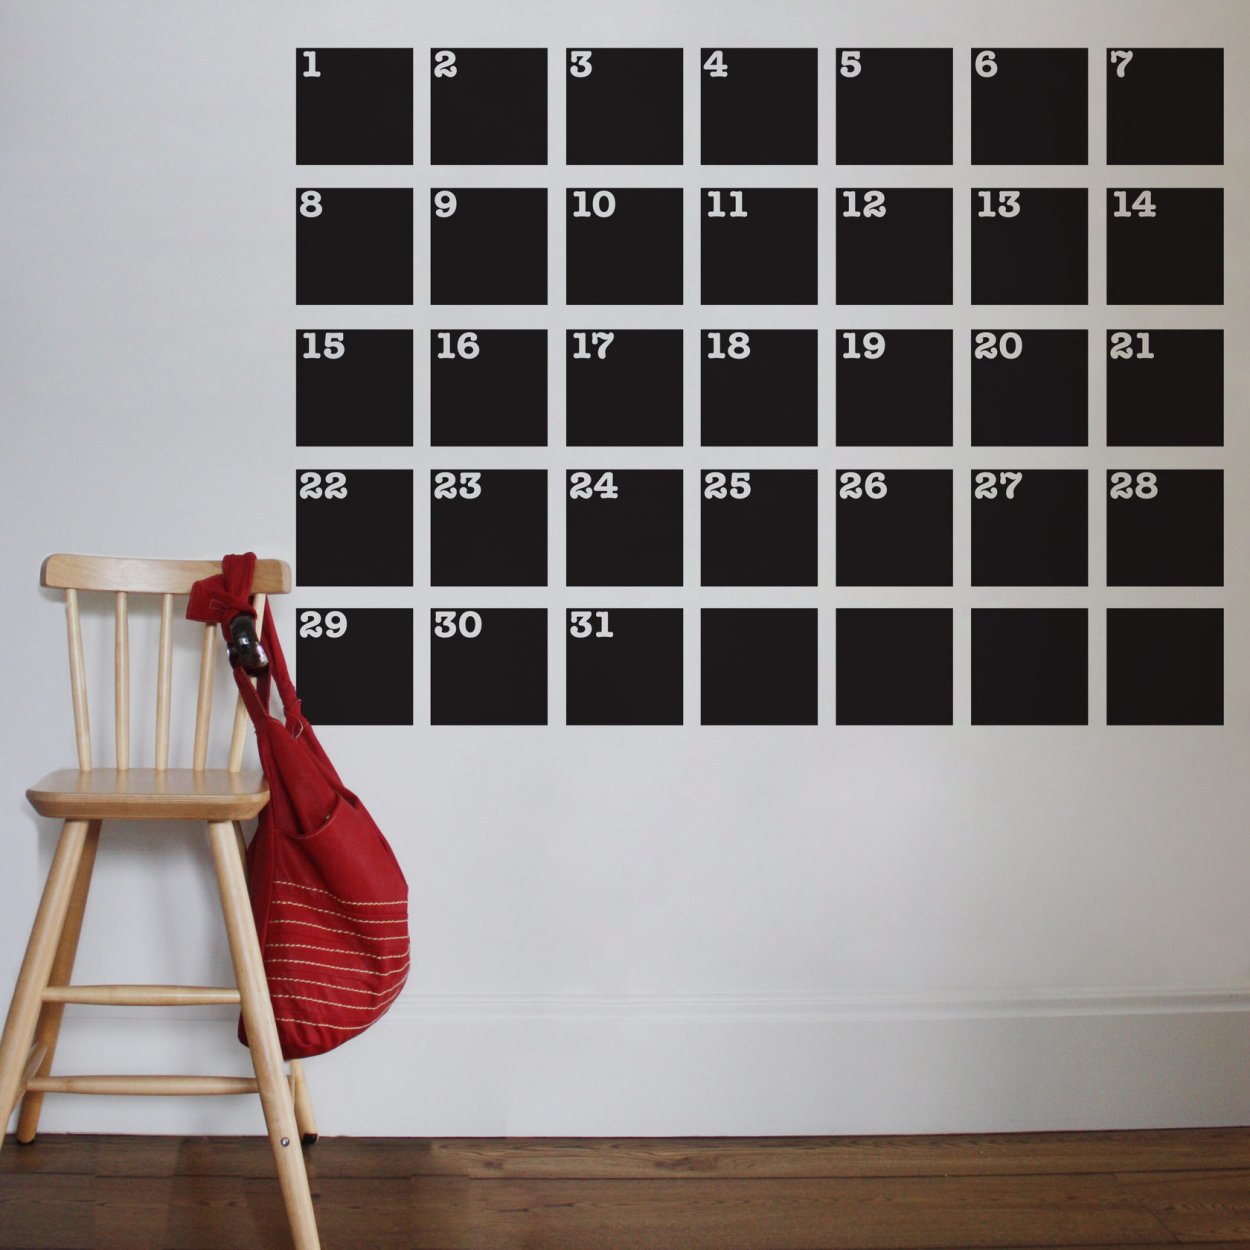 Календарь на стену